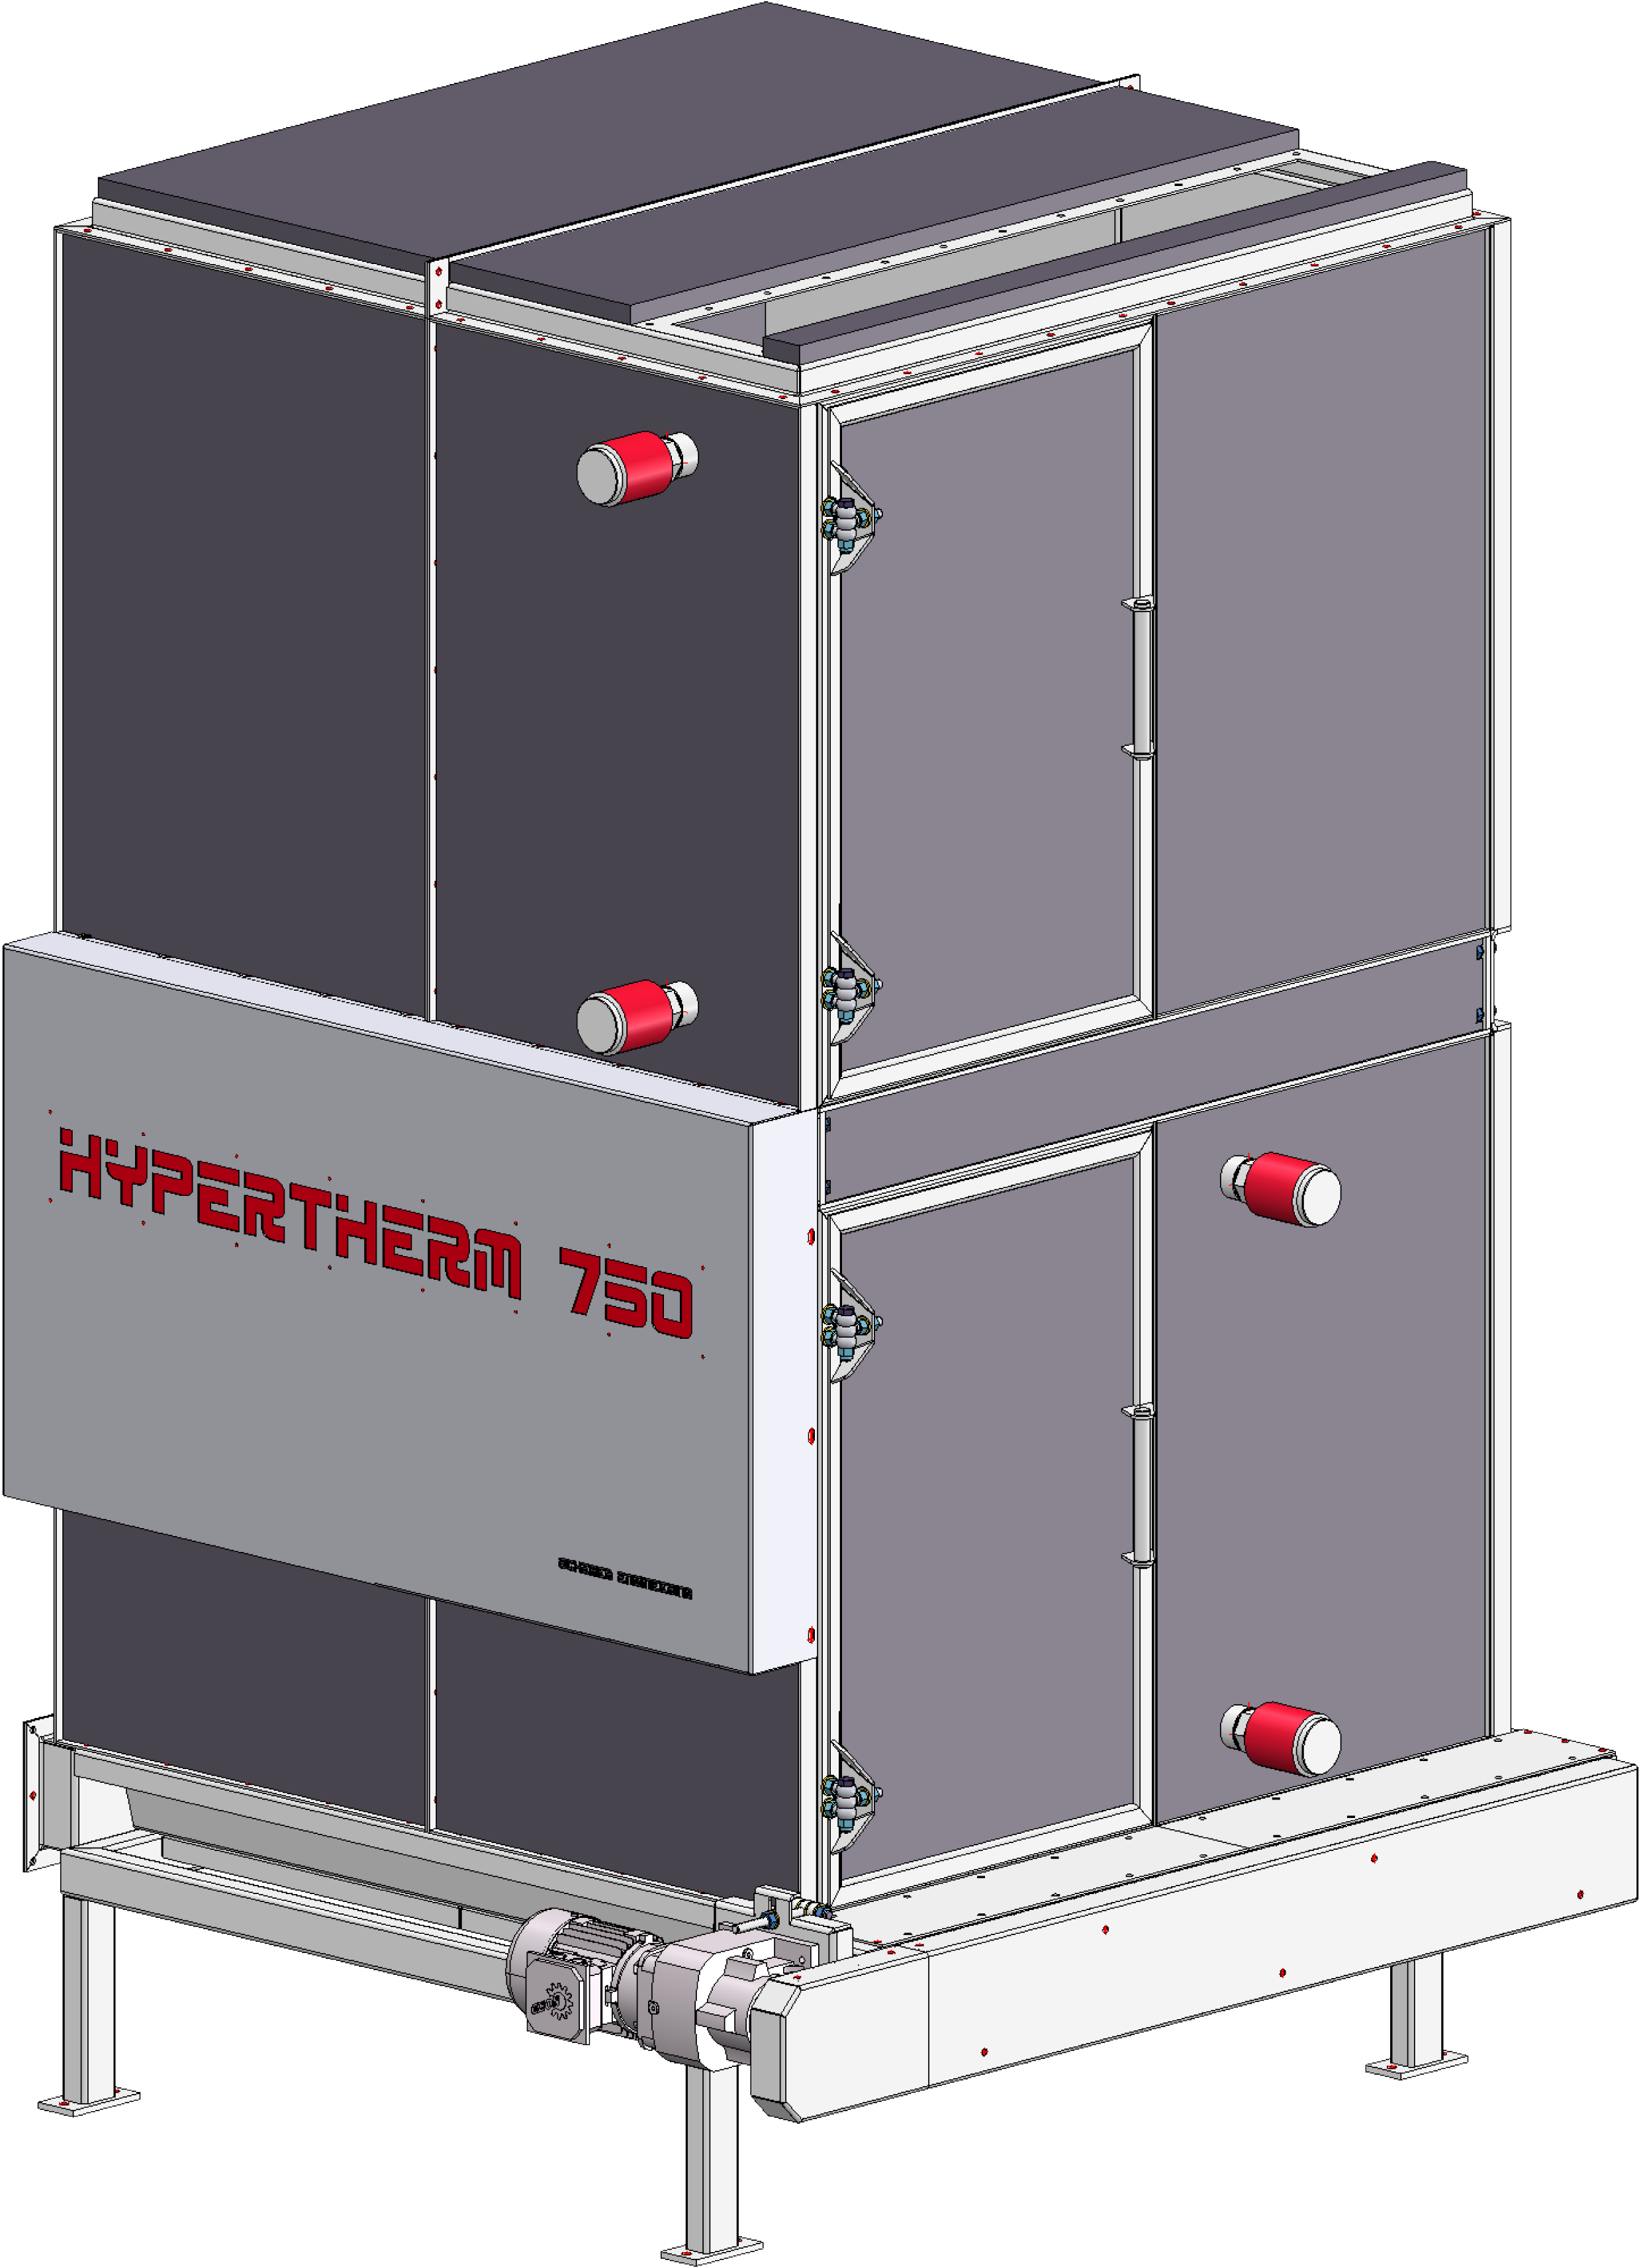 Hygienizer Hypertherm 750